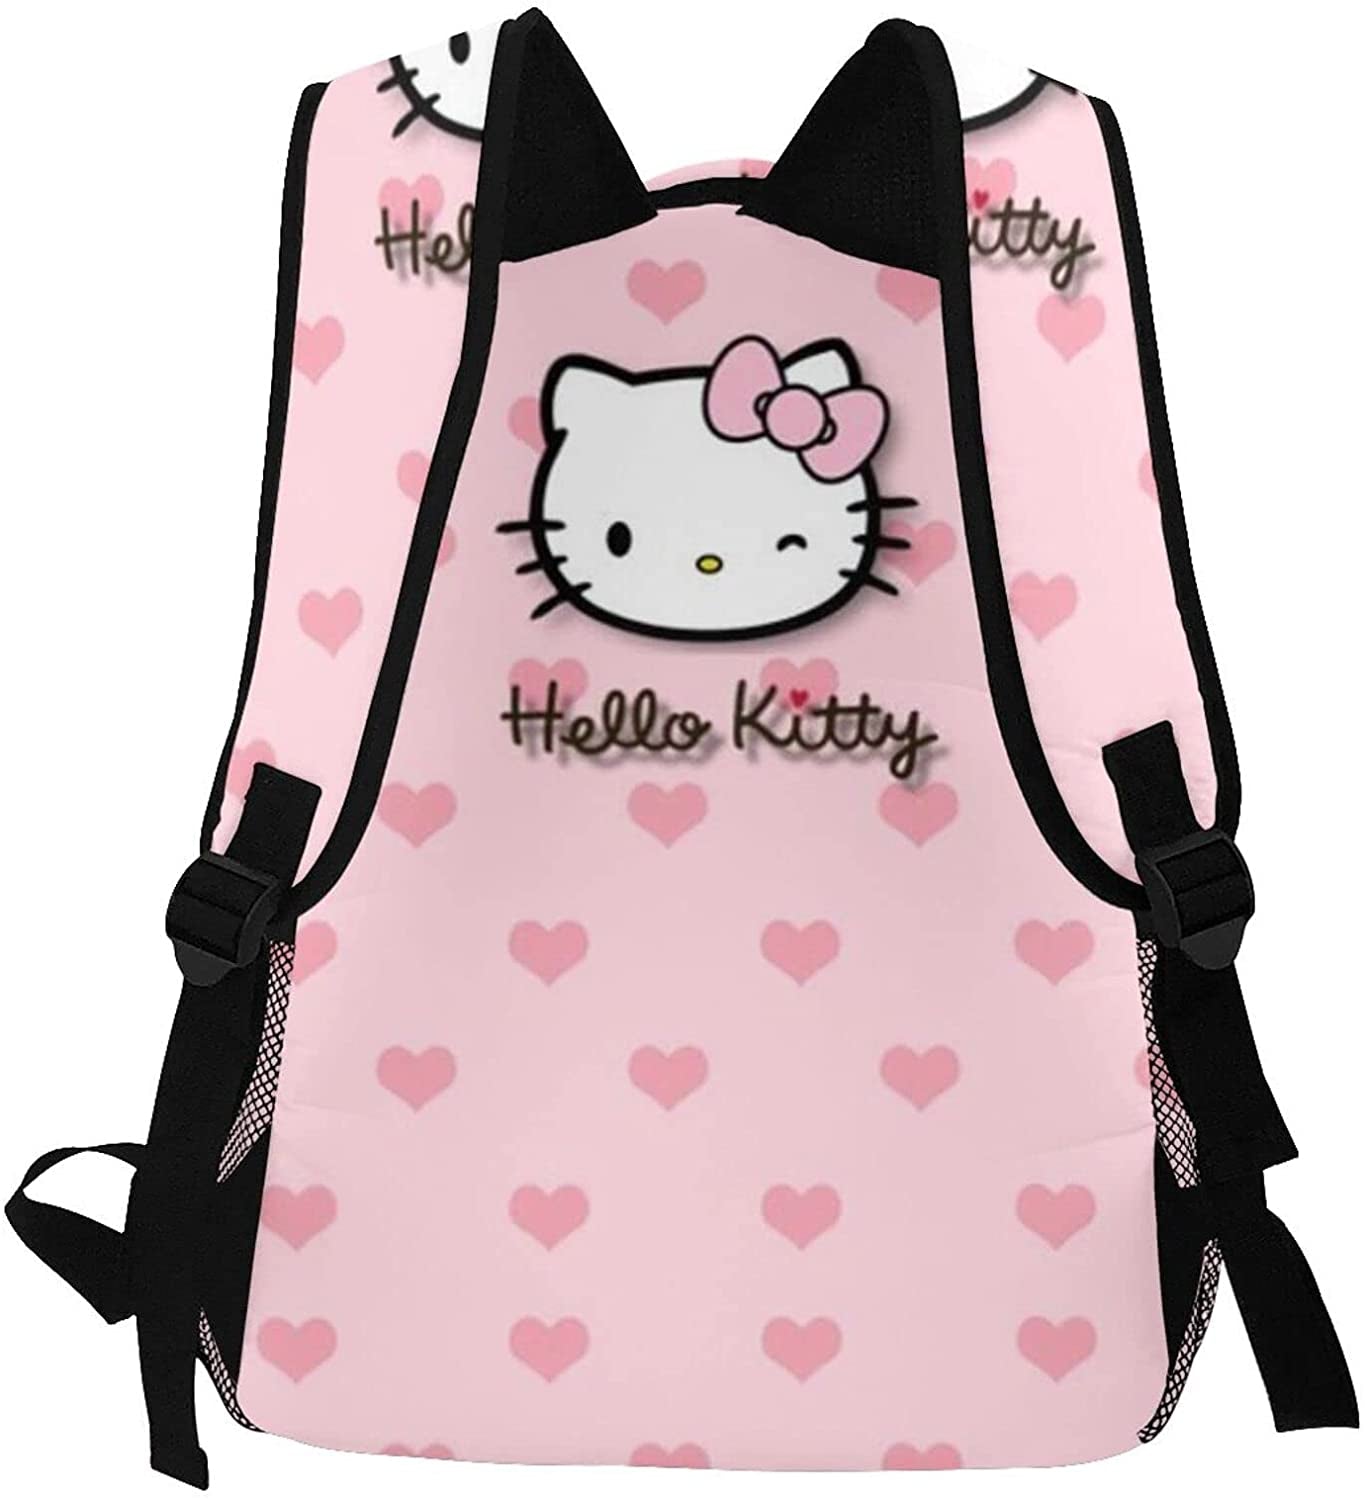 Kawaii Cartoon Backpack, Pink Cat College Bag Laptop Bookbag for Women Girl